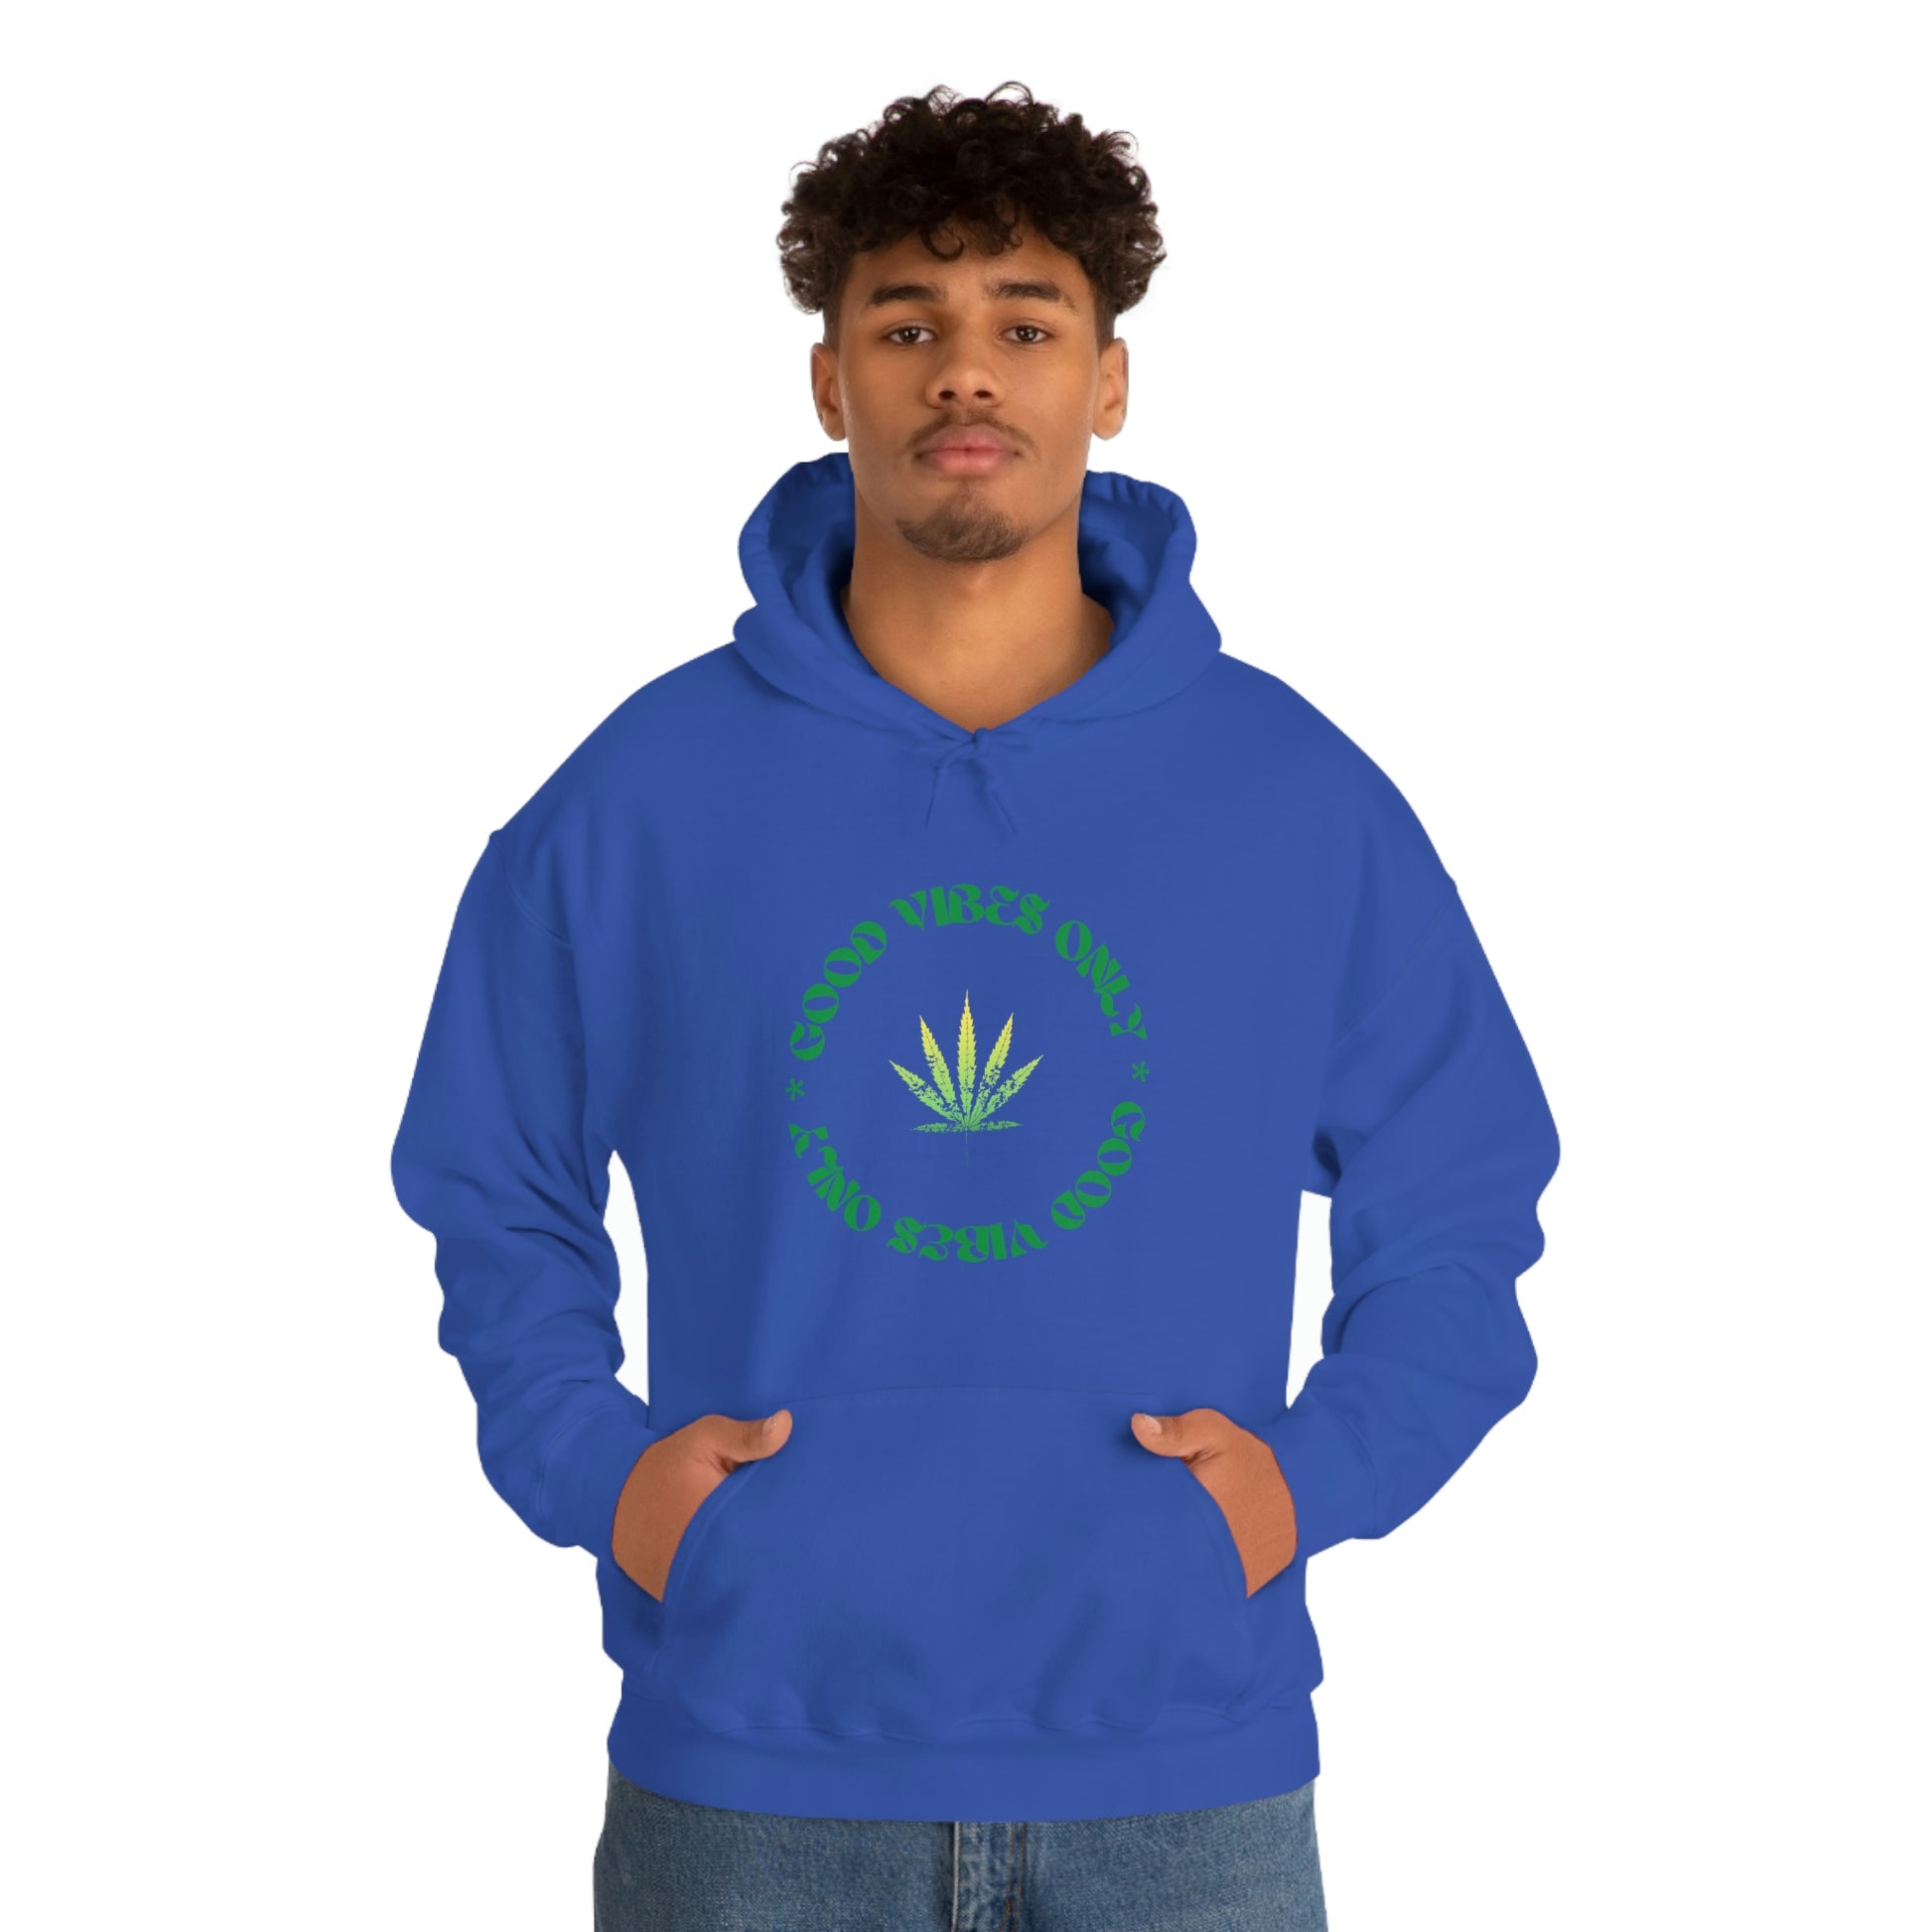 A man wearing a blue good vibes only cannabis sweatshirt